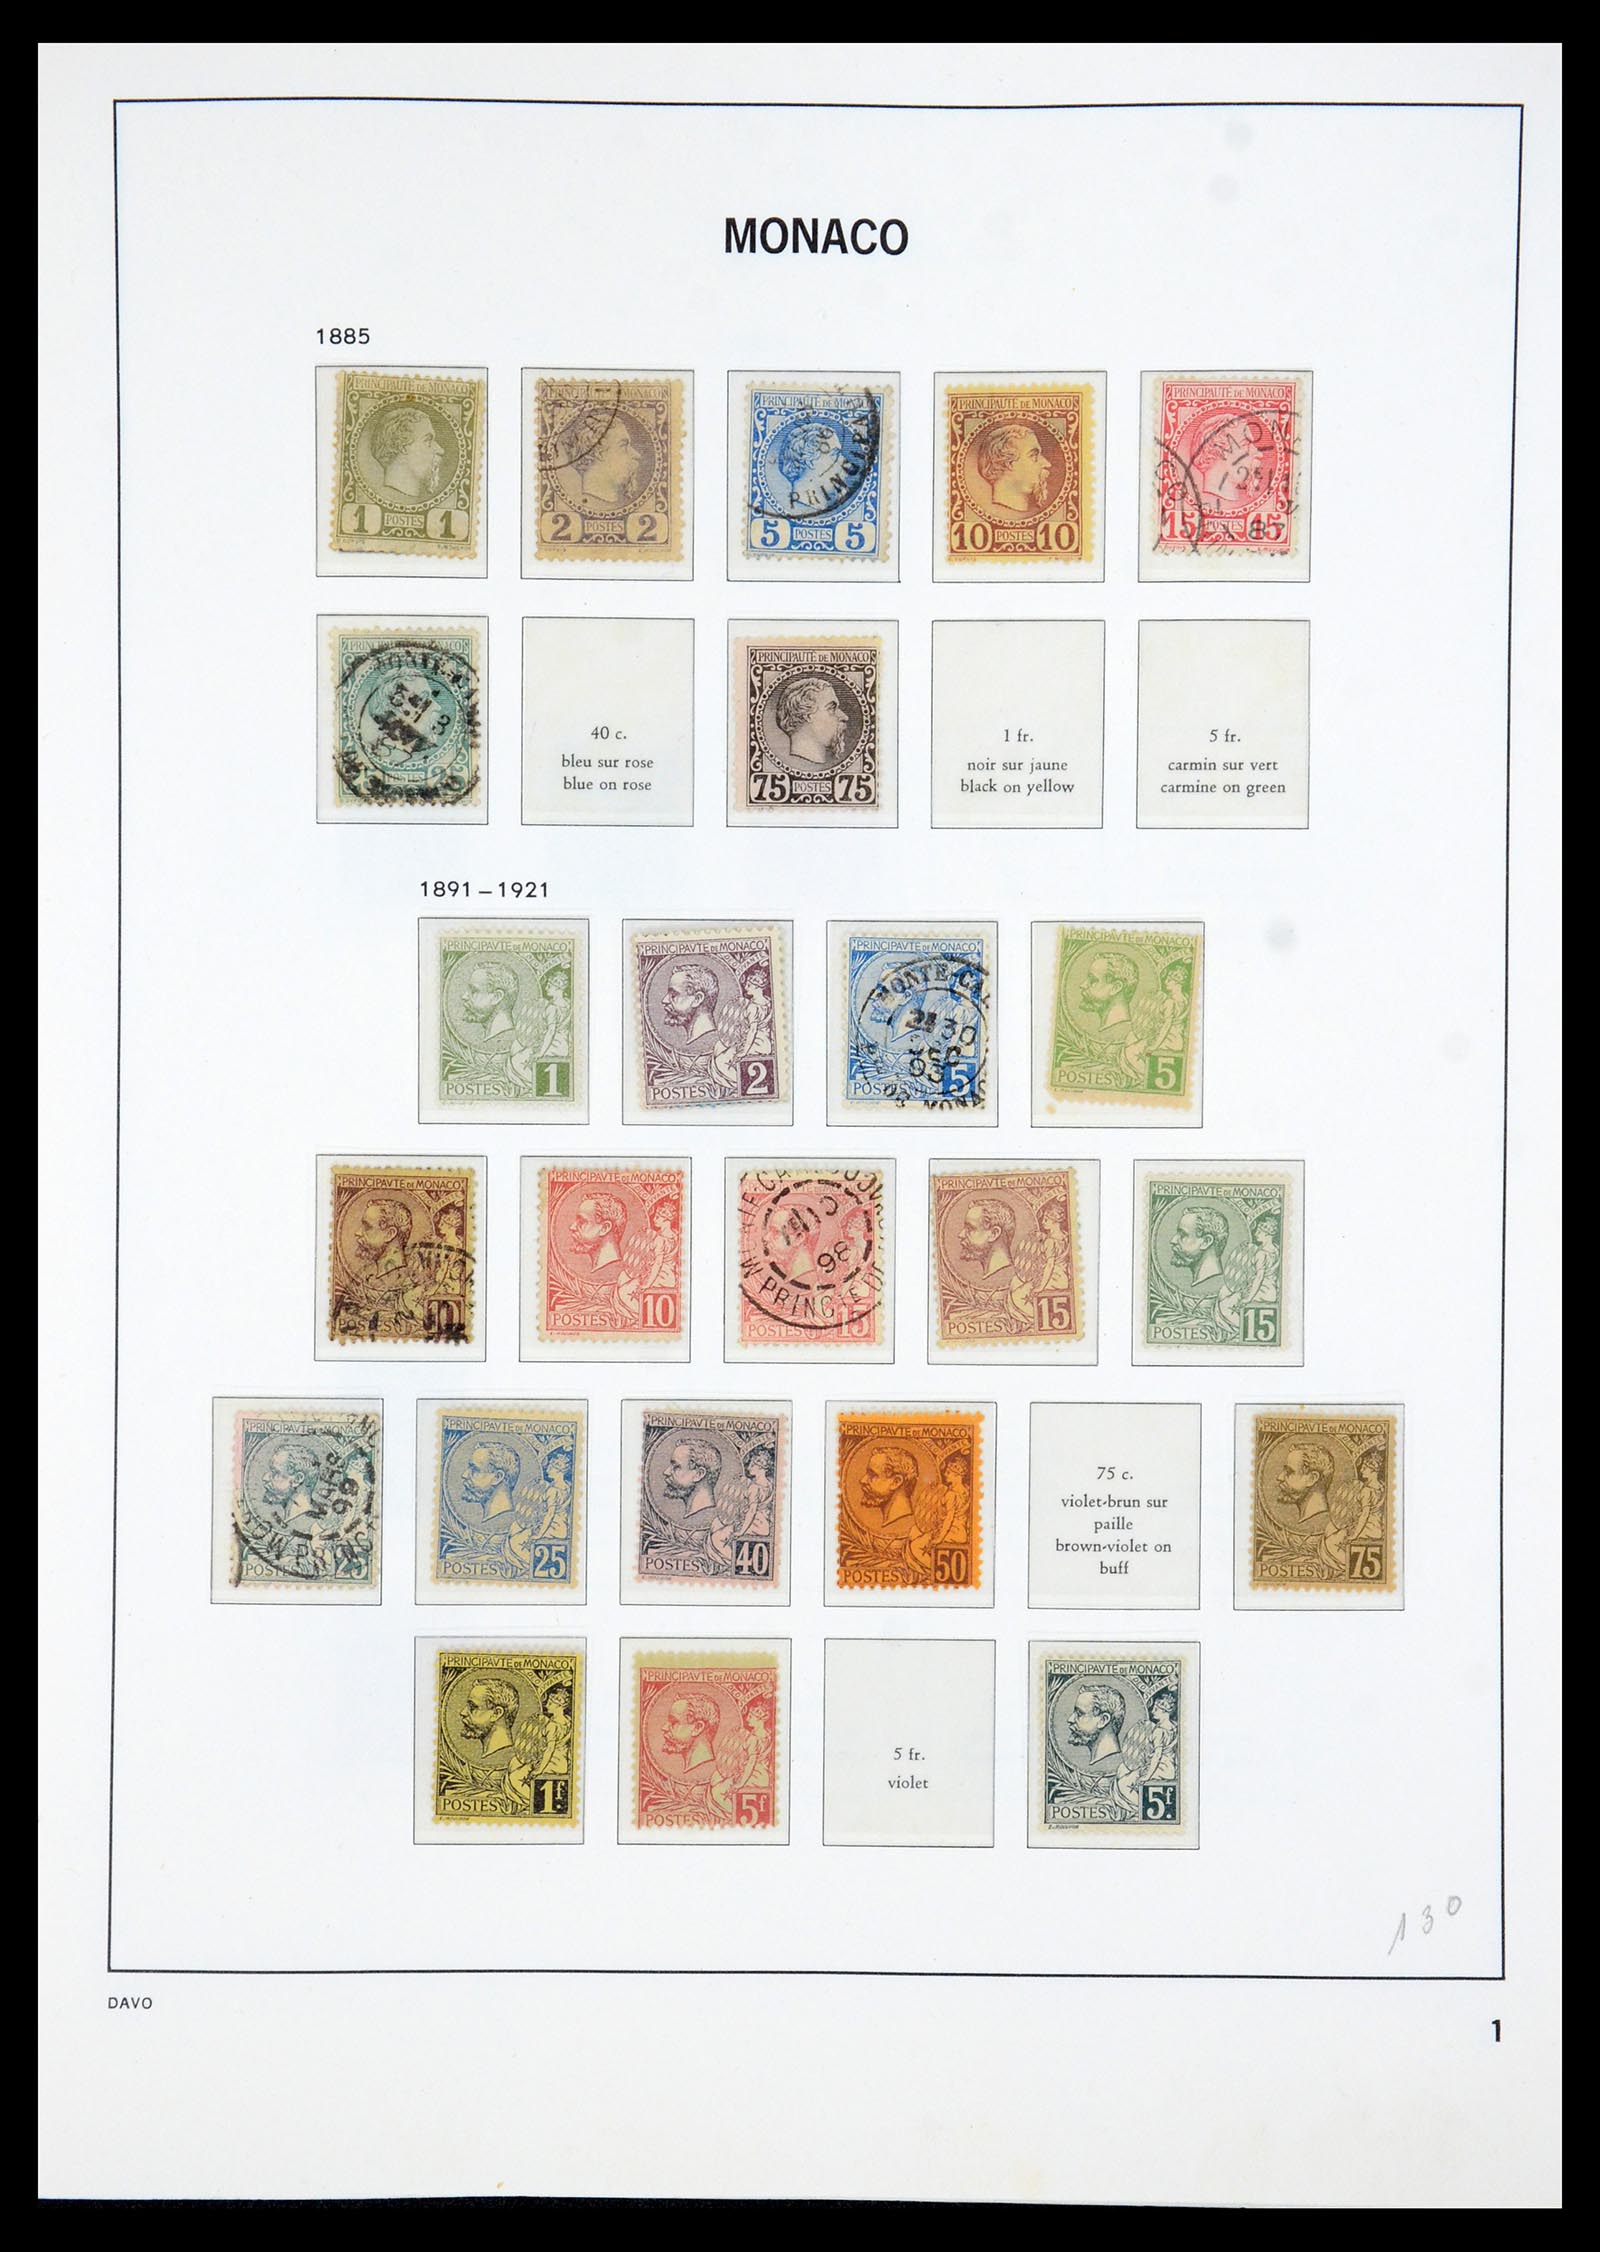 35913 001 - Stamp Collection 35913 Monaco 1885-1974.